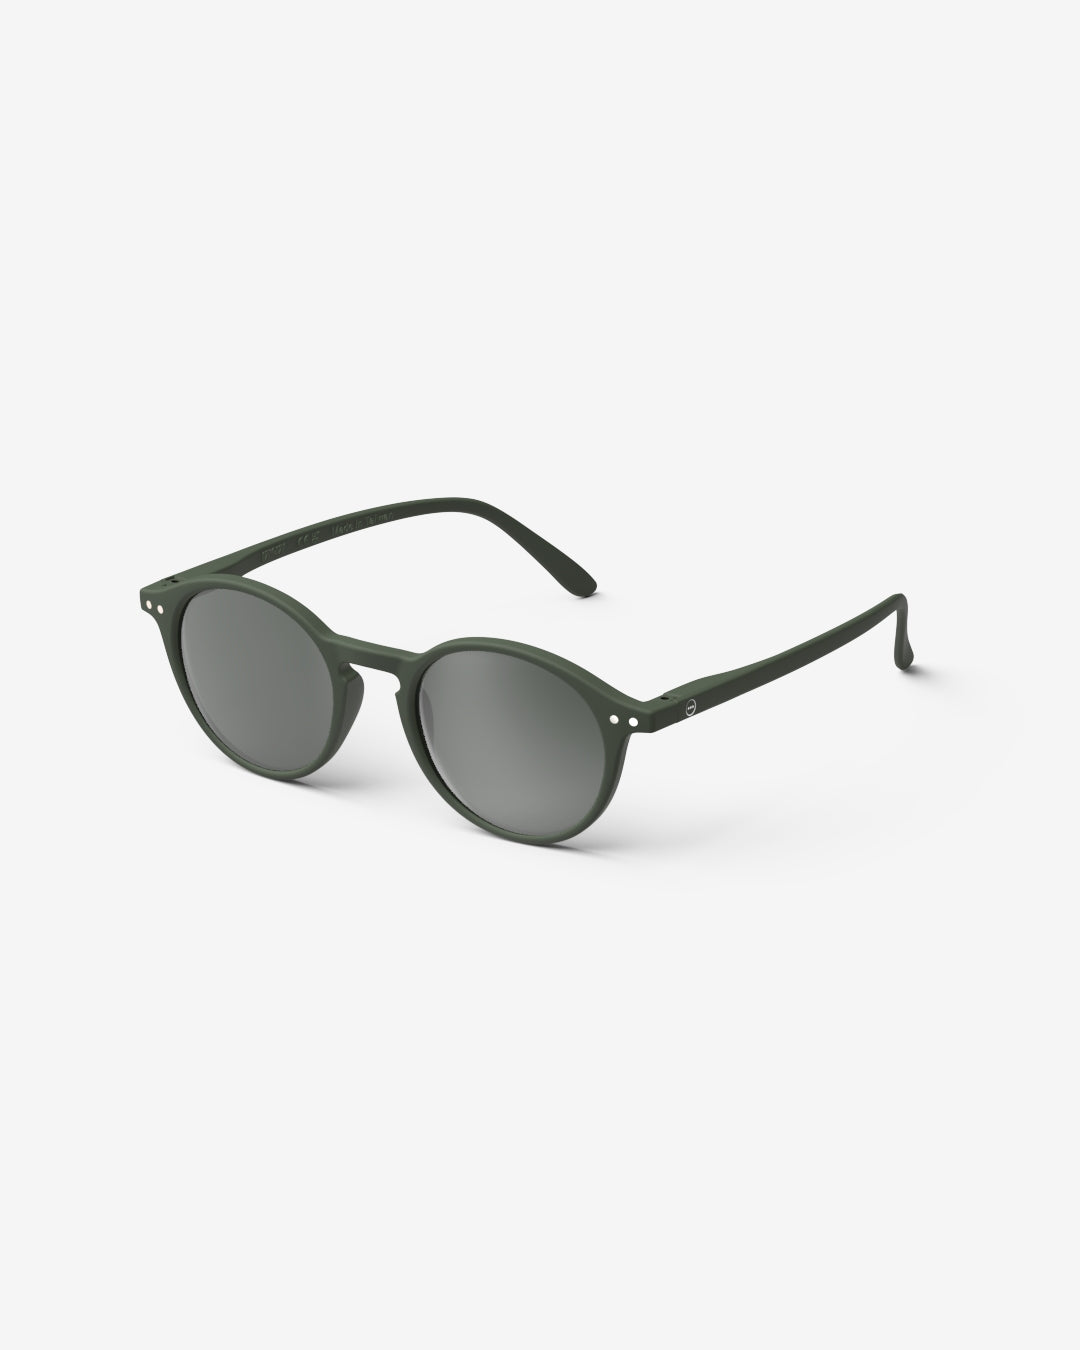 Adult Shape #D The Iconic - Kaki Green - نظارات